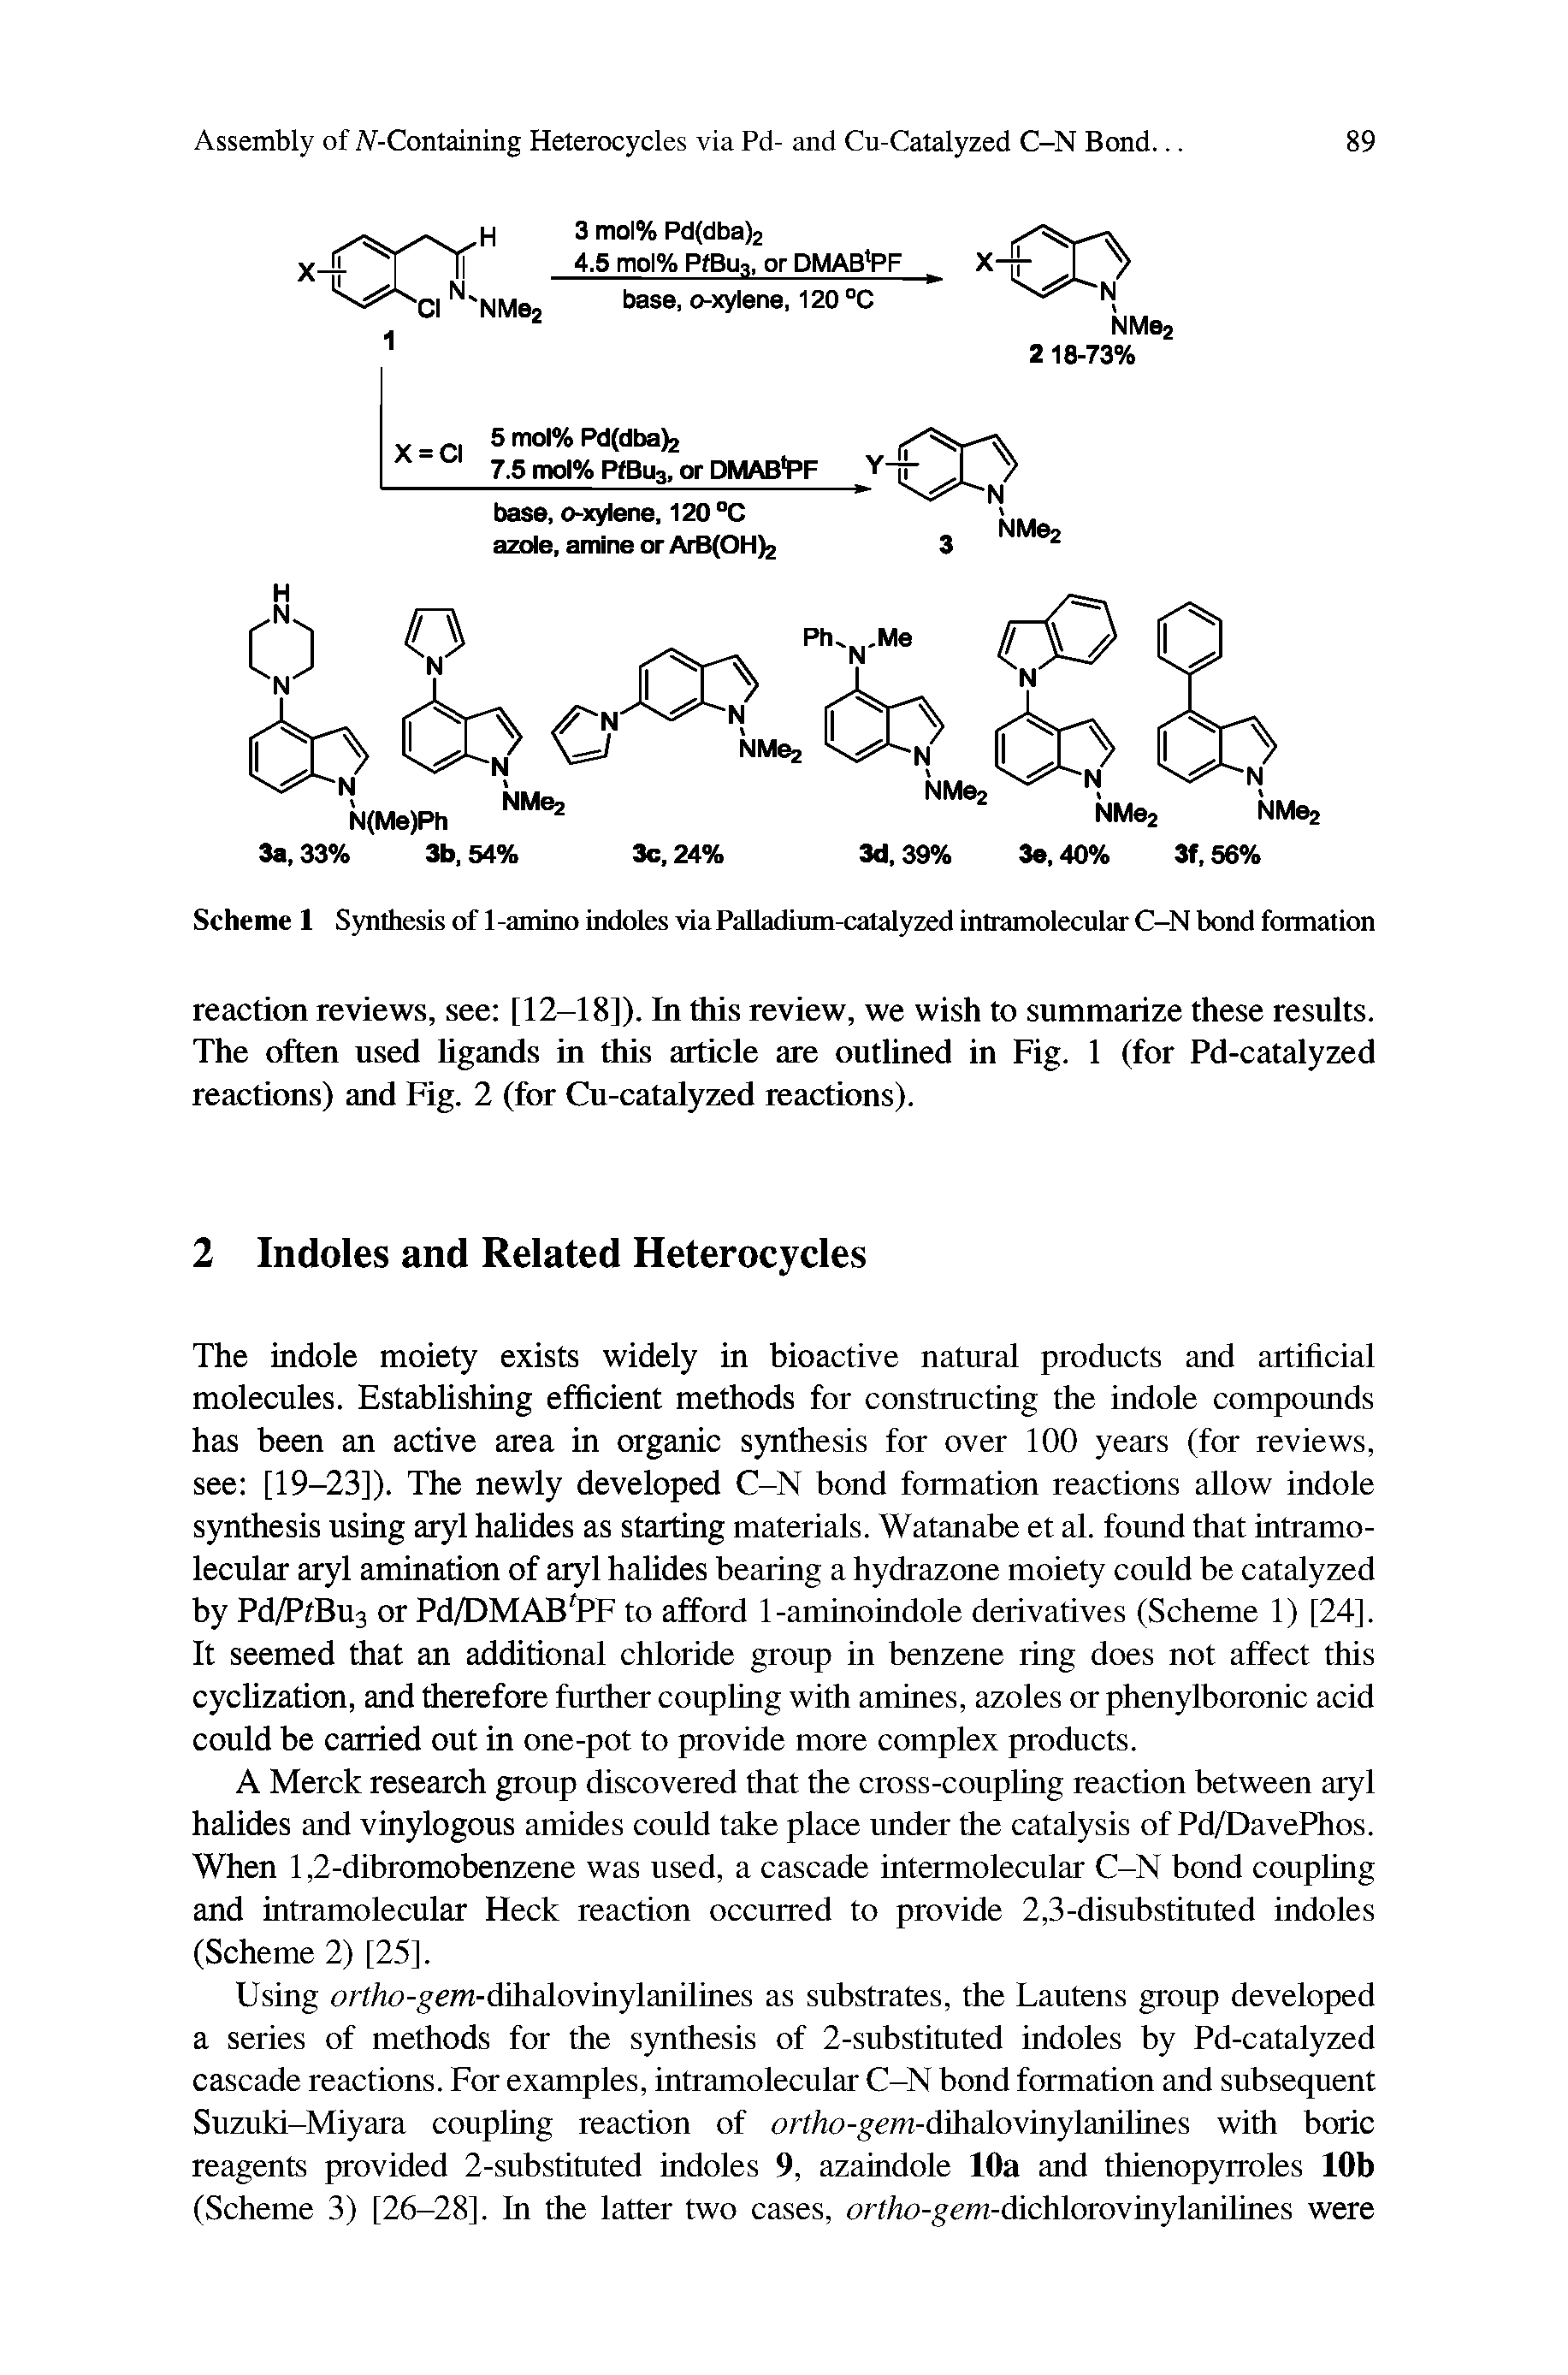 Scheme 1 Synthesis of 1-amino indoles via Palladium-catalyzed intramolecular C-N bond formation...